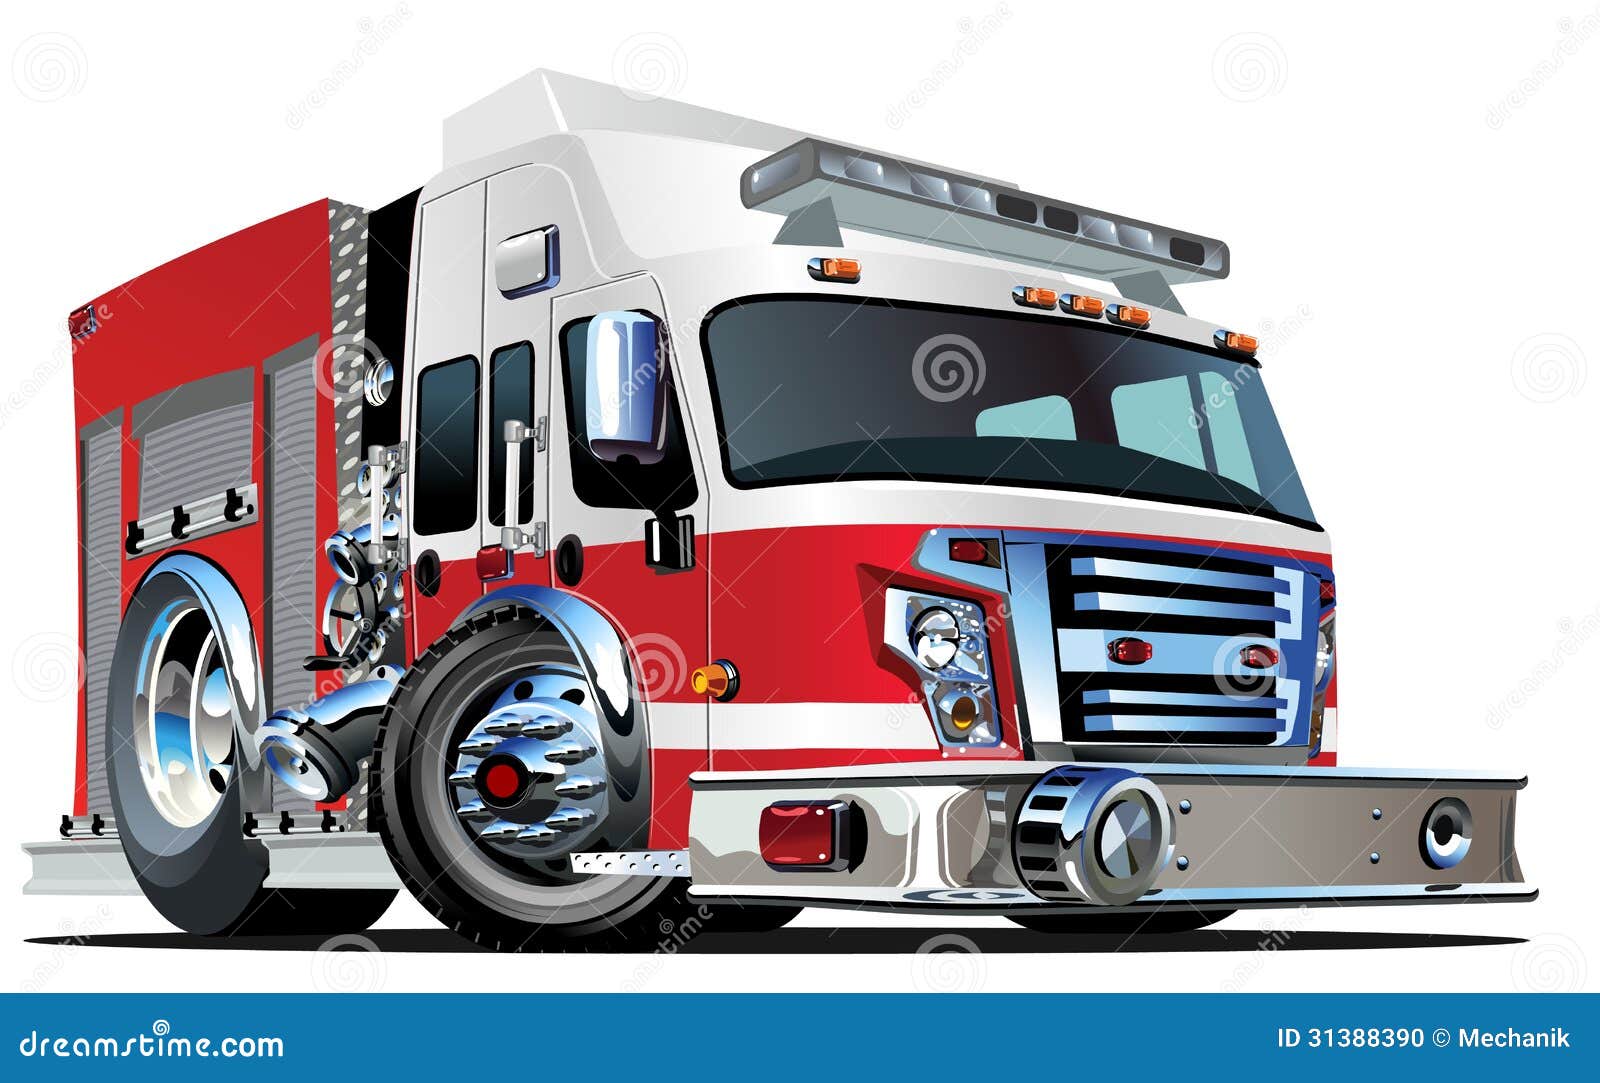 Vector Cartoon Fire Truck Stock Photo - Image: 31388390